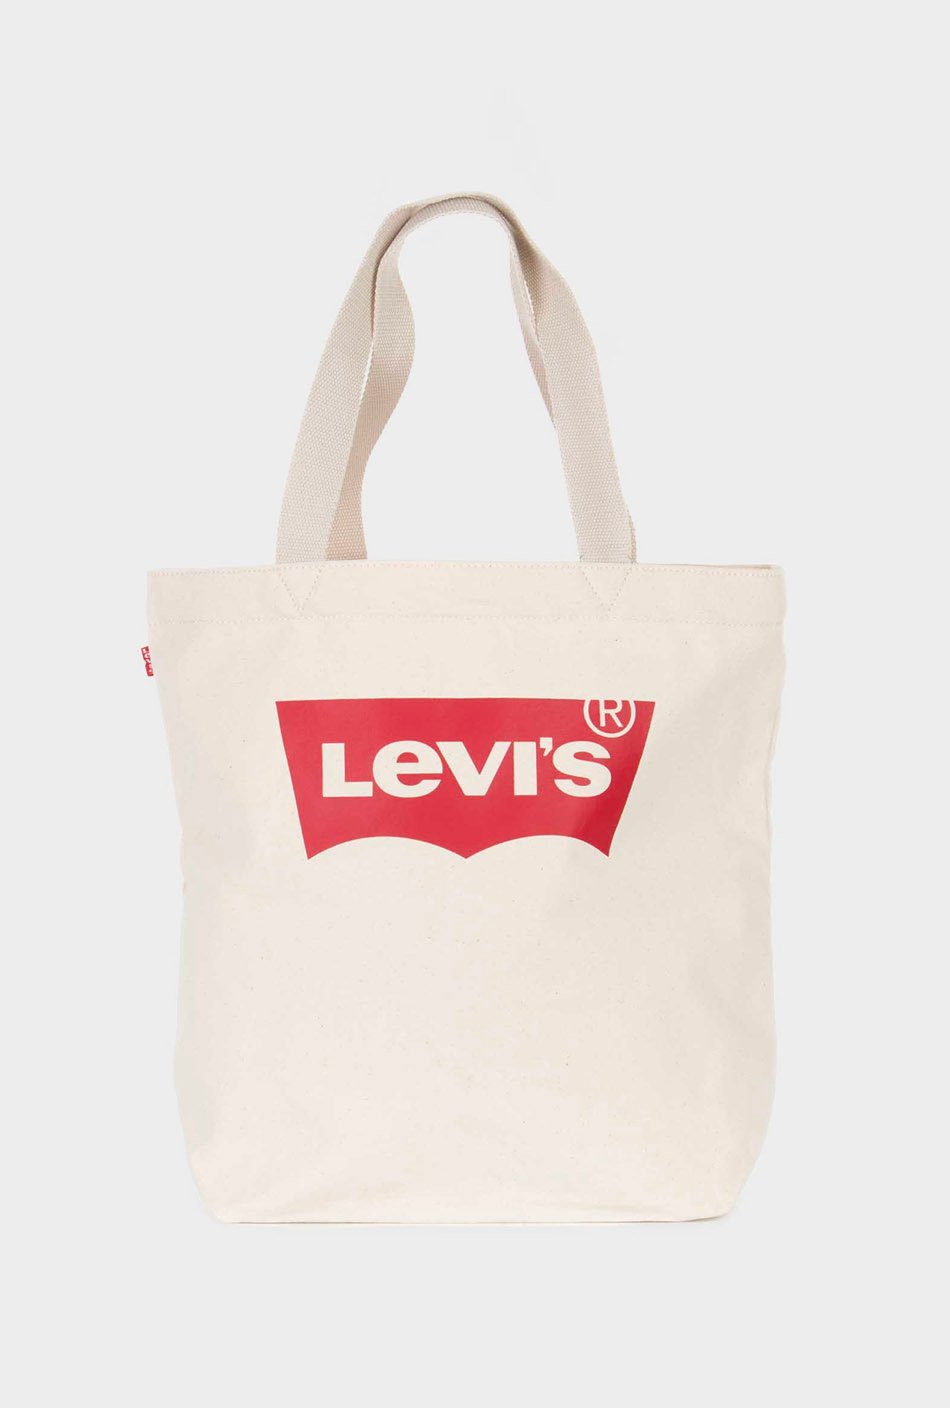 Levi's off white Tote Bag